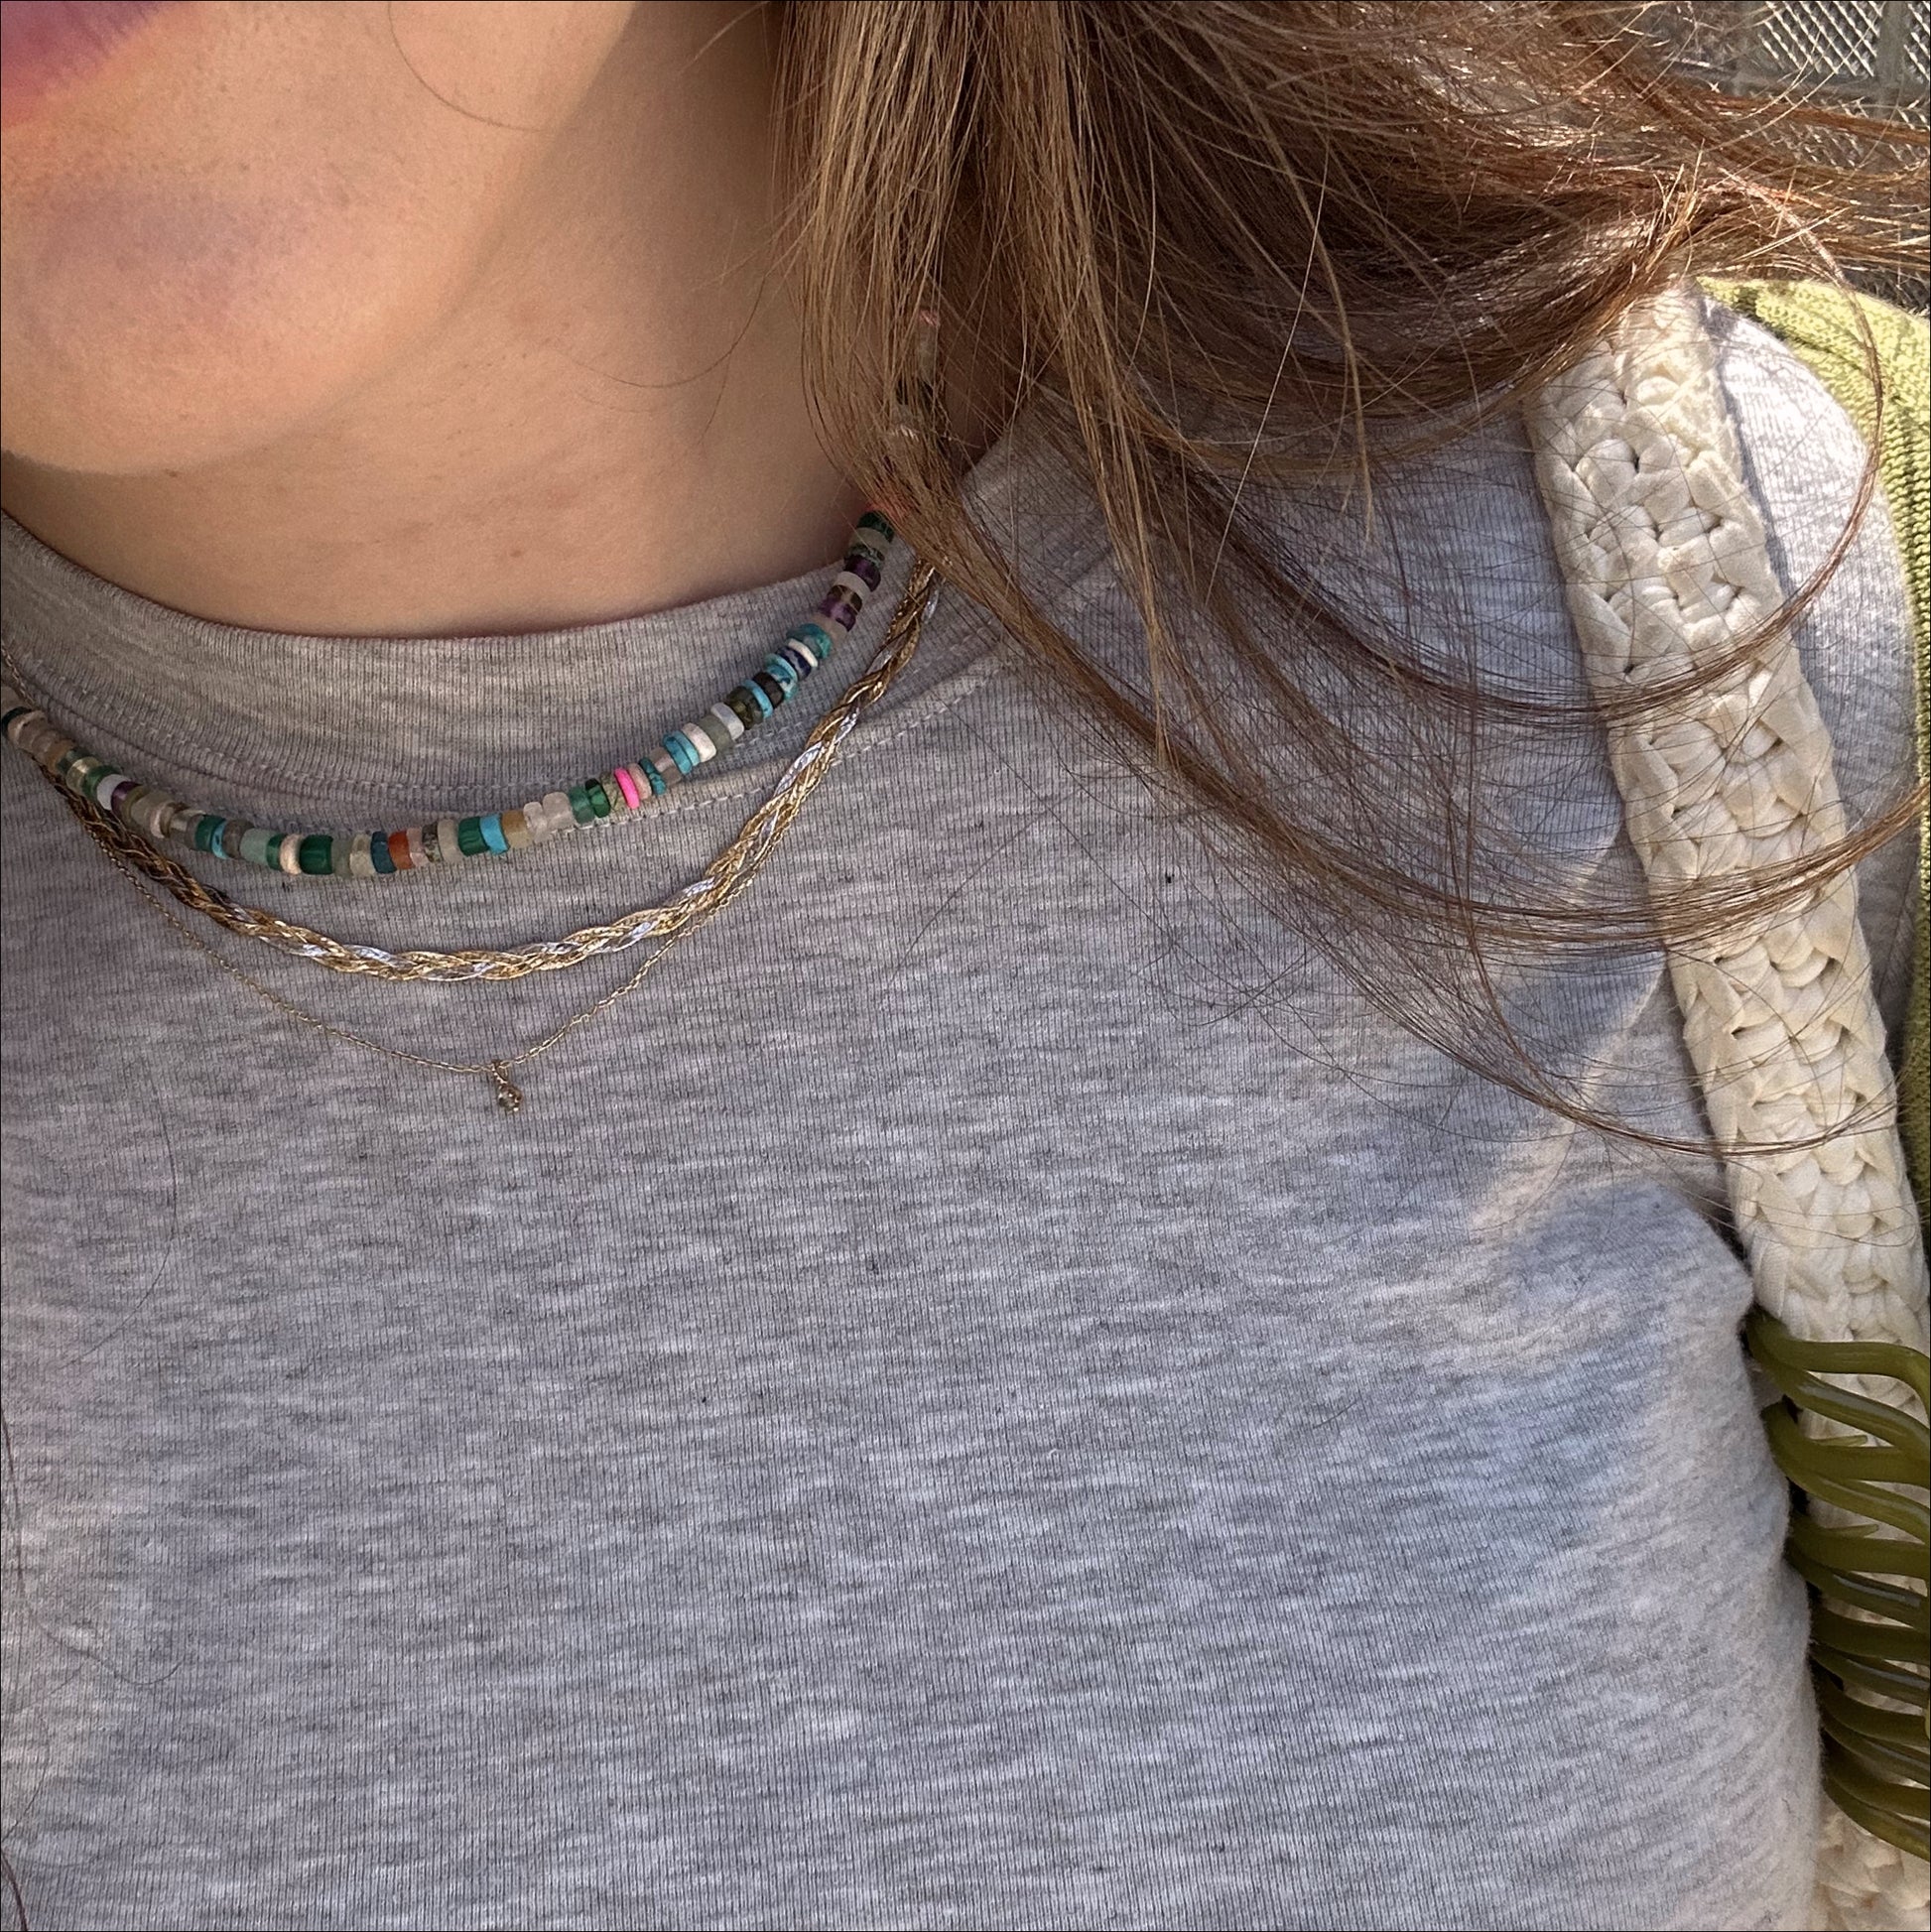 V-Necklace - Vida  Minimalist necklace gold, Neck pieces jewelry, Jewelry  necklace simple